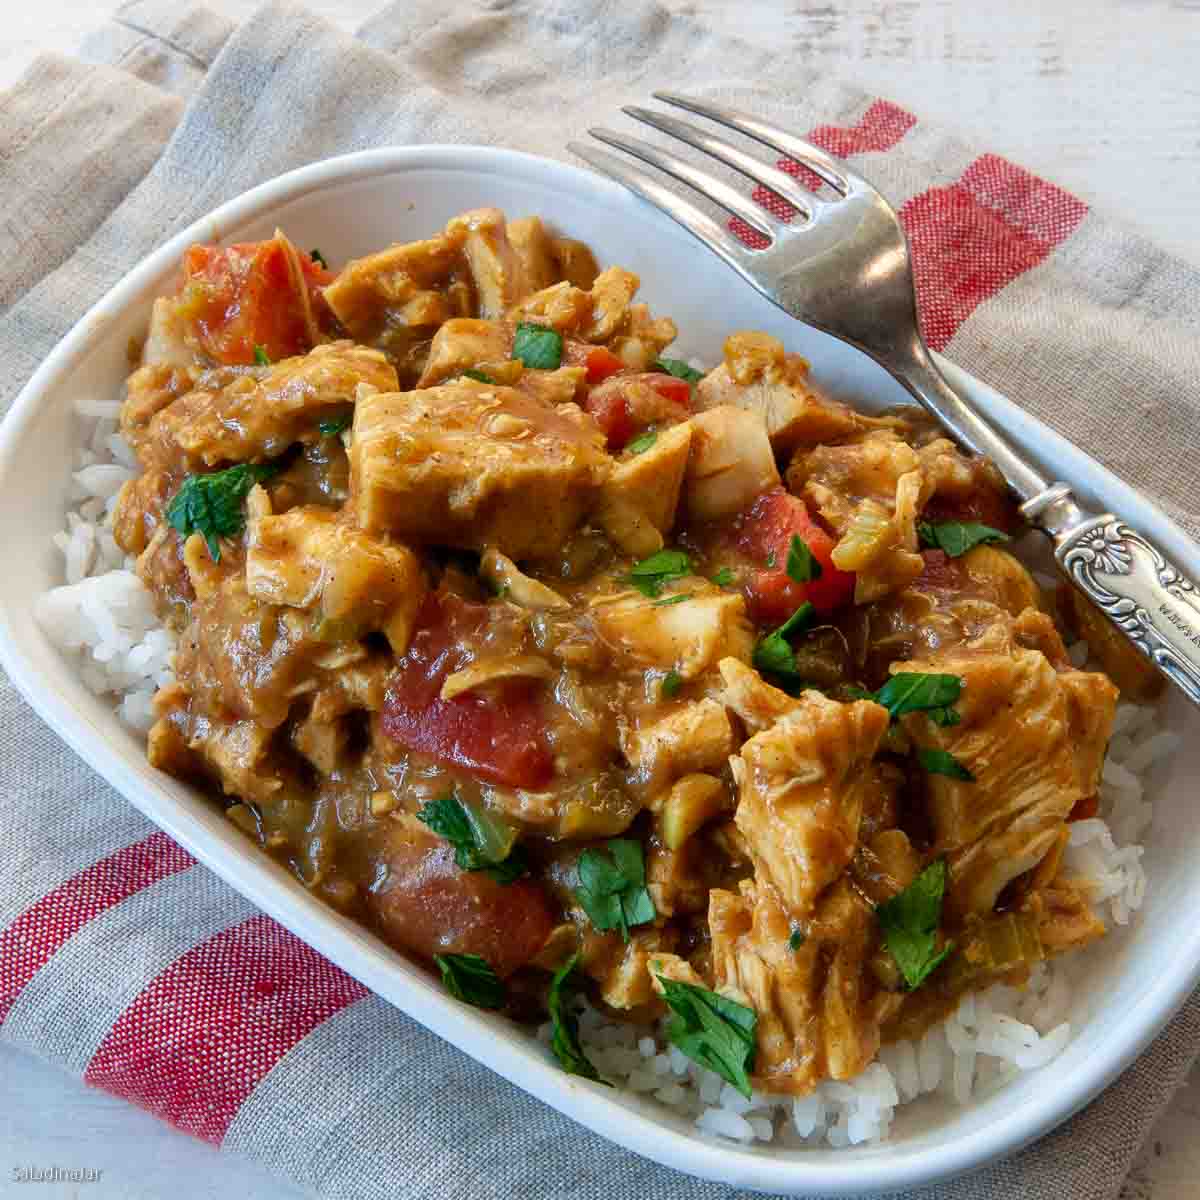 mild chicken curry served over rice.